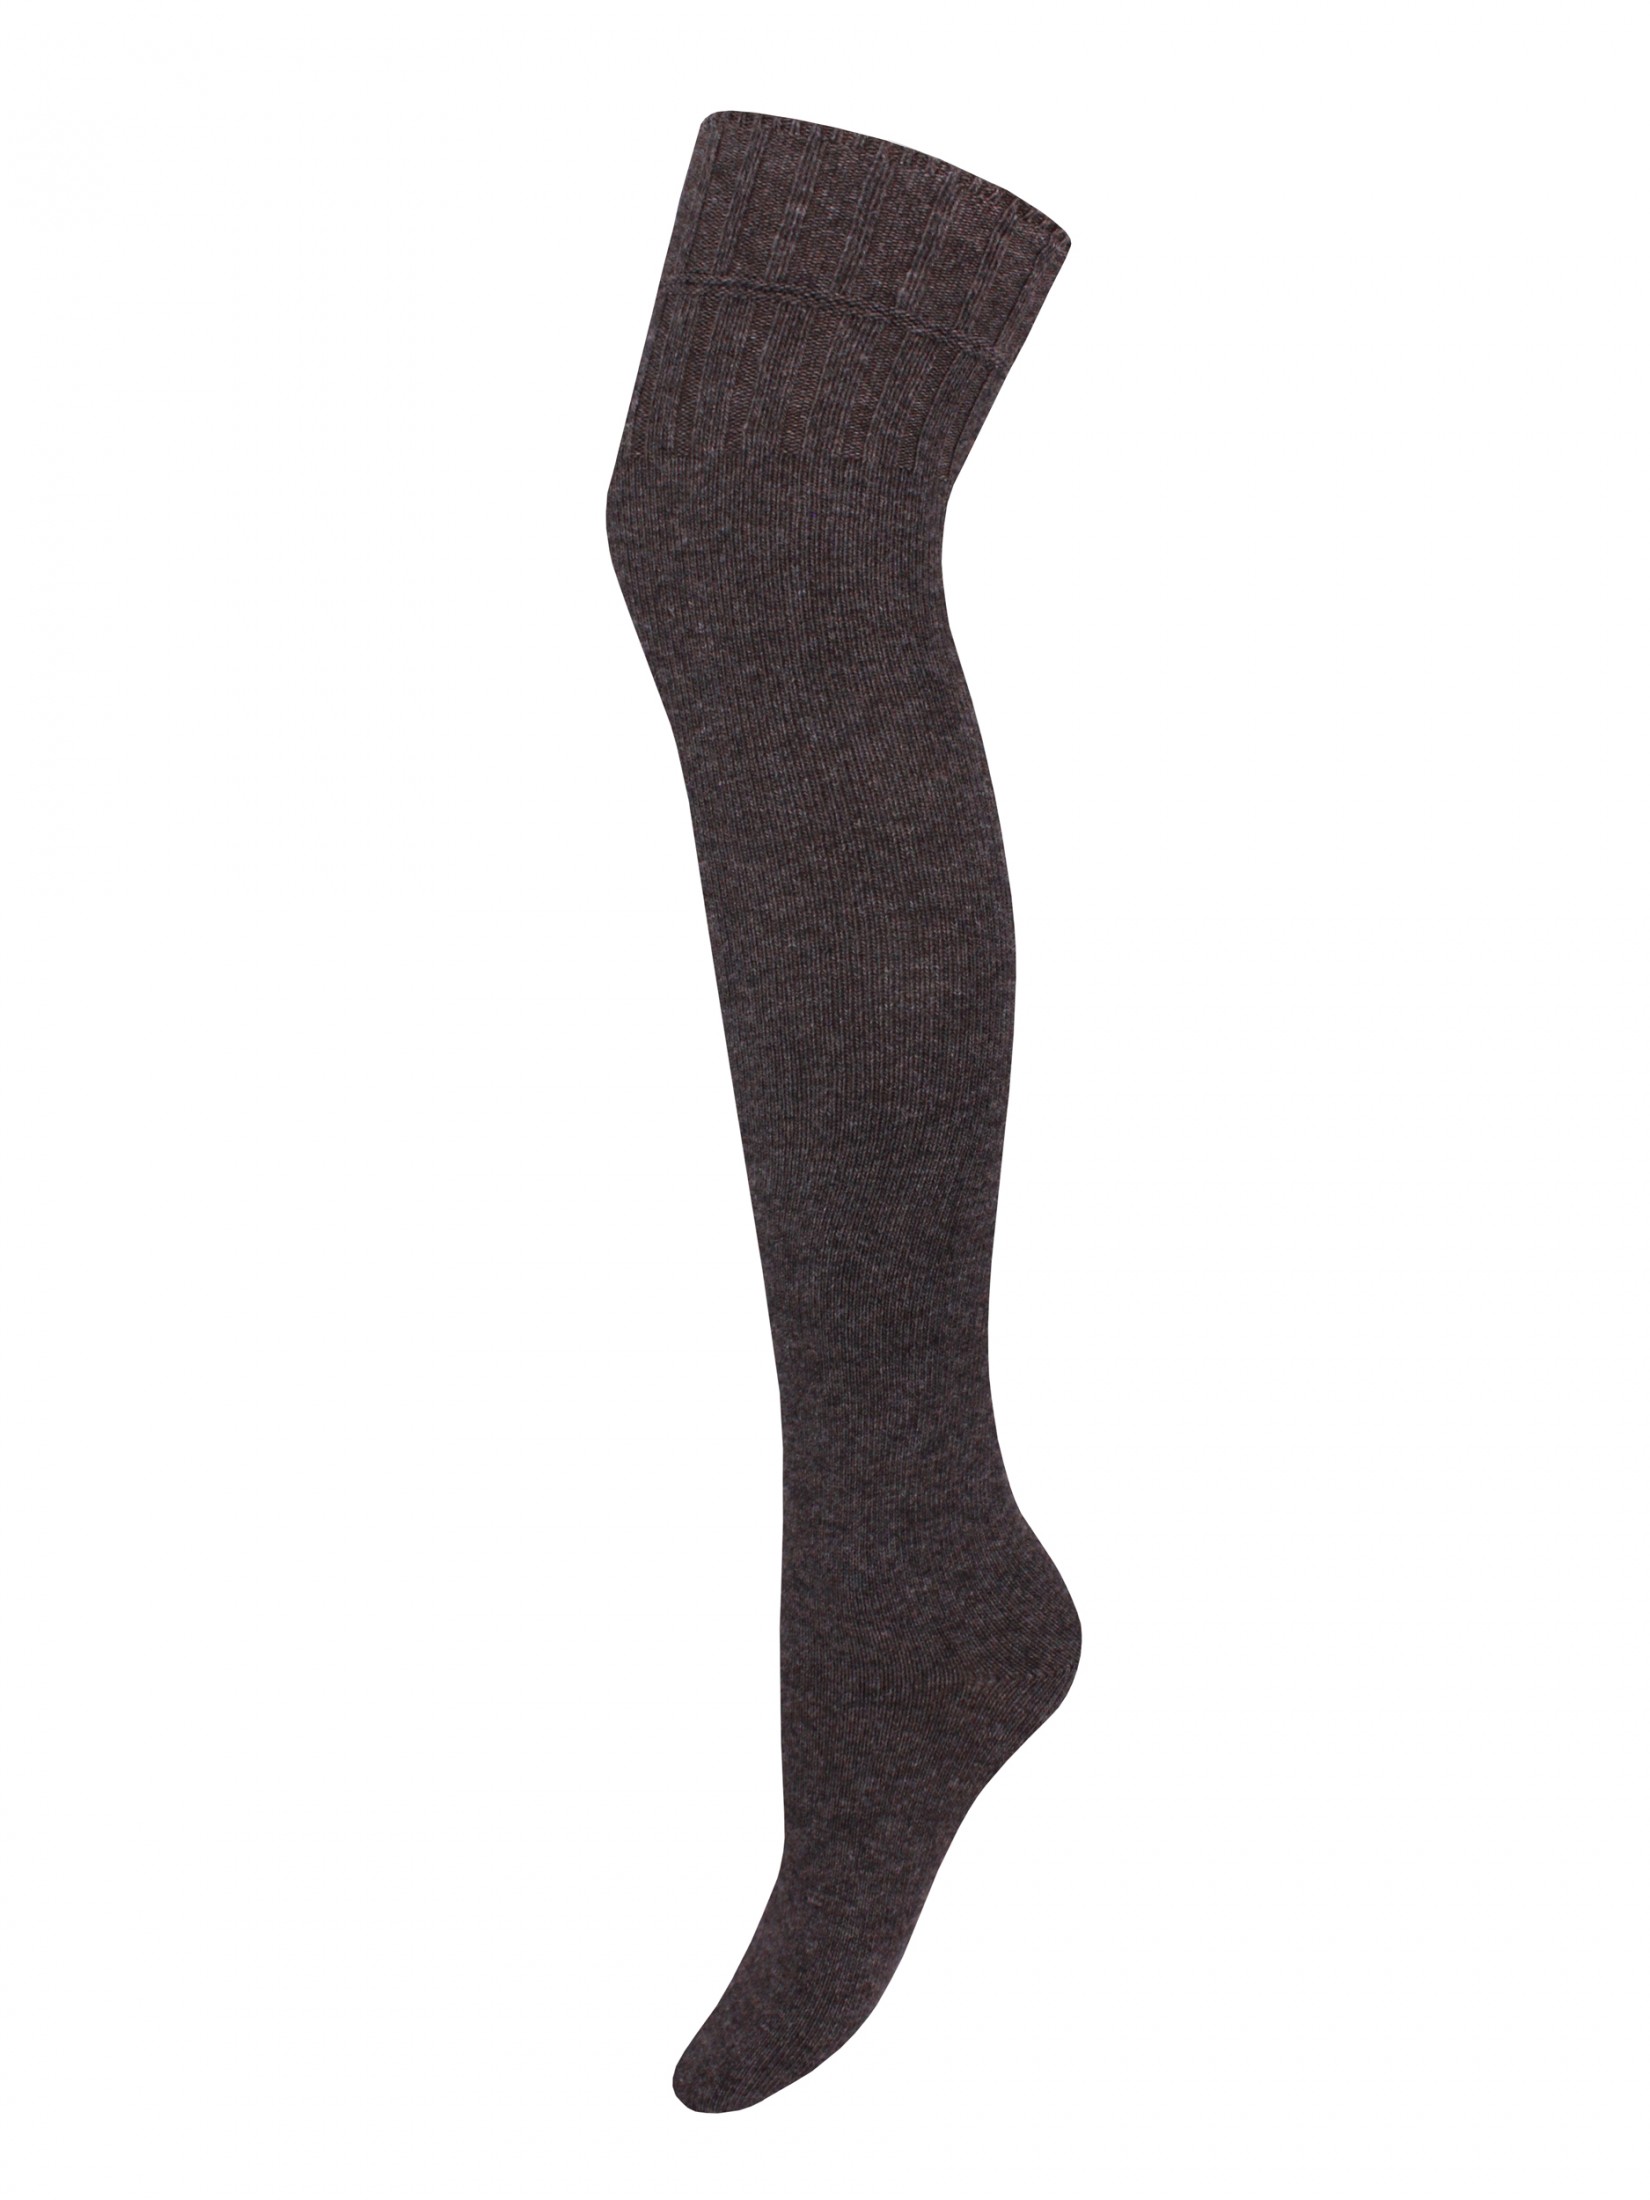 Гольфины женские Mademoiselle 19110 over knee коричневые one size